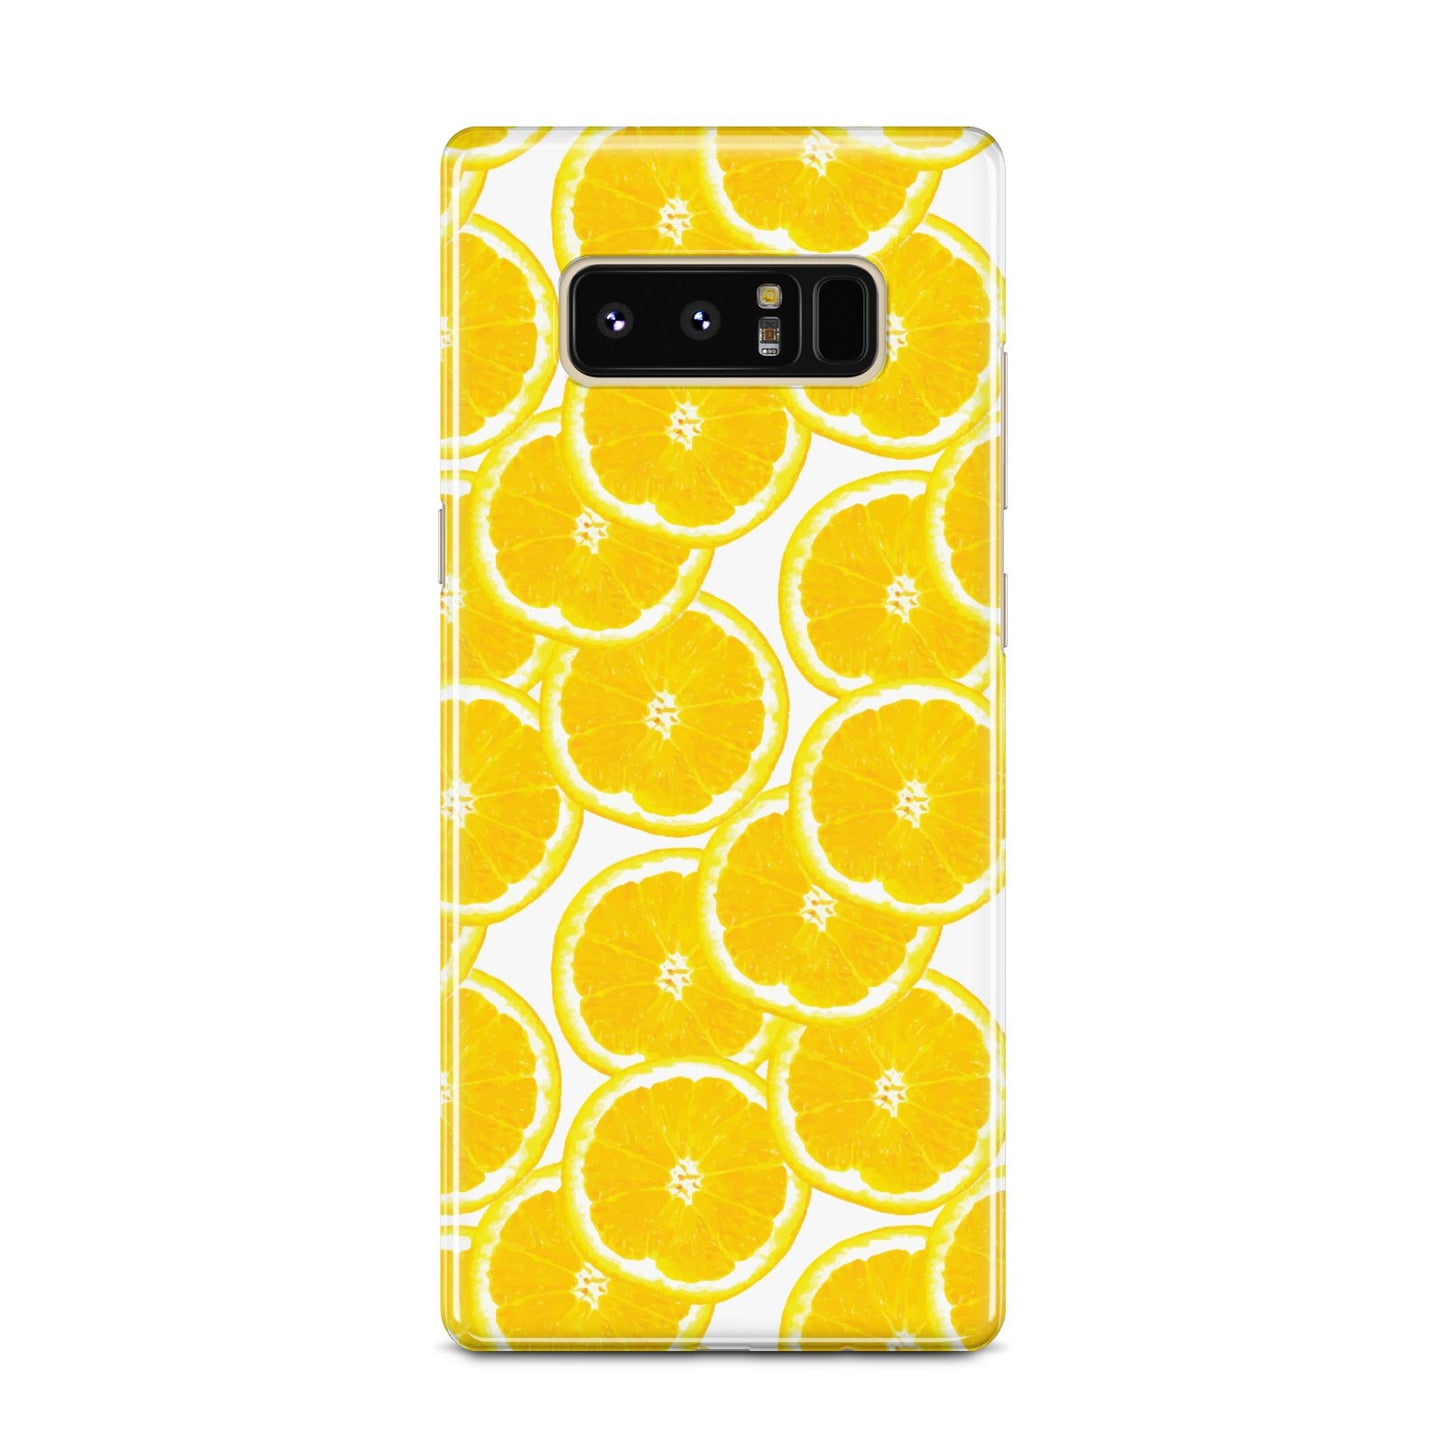 Lemon Fruit Slices Samsung Galaxy Note 8 Case